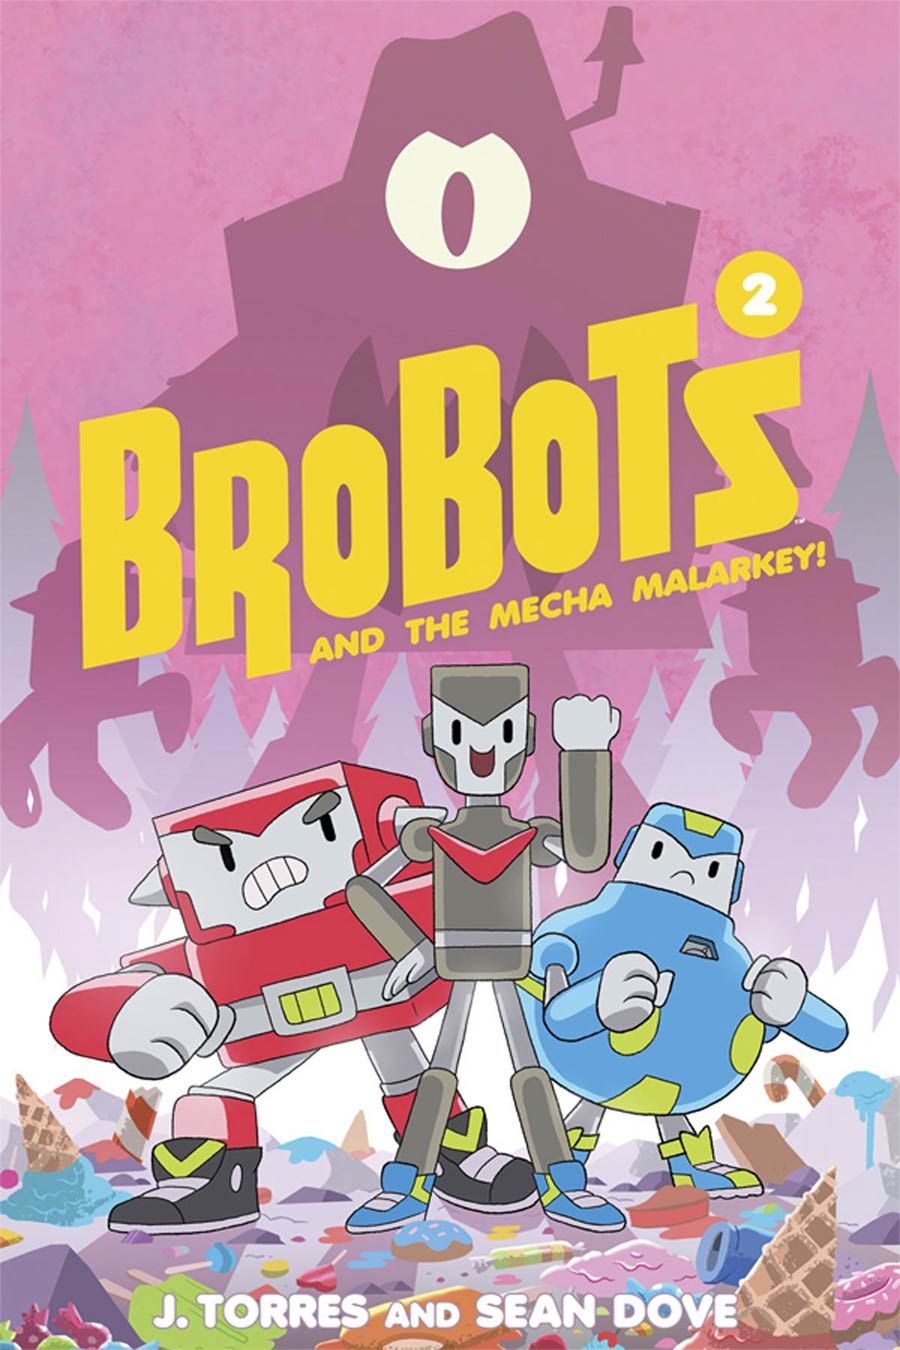 Brobots Vol 2 Brobots And The Mecha Malarkey HC